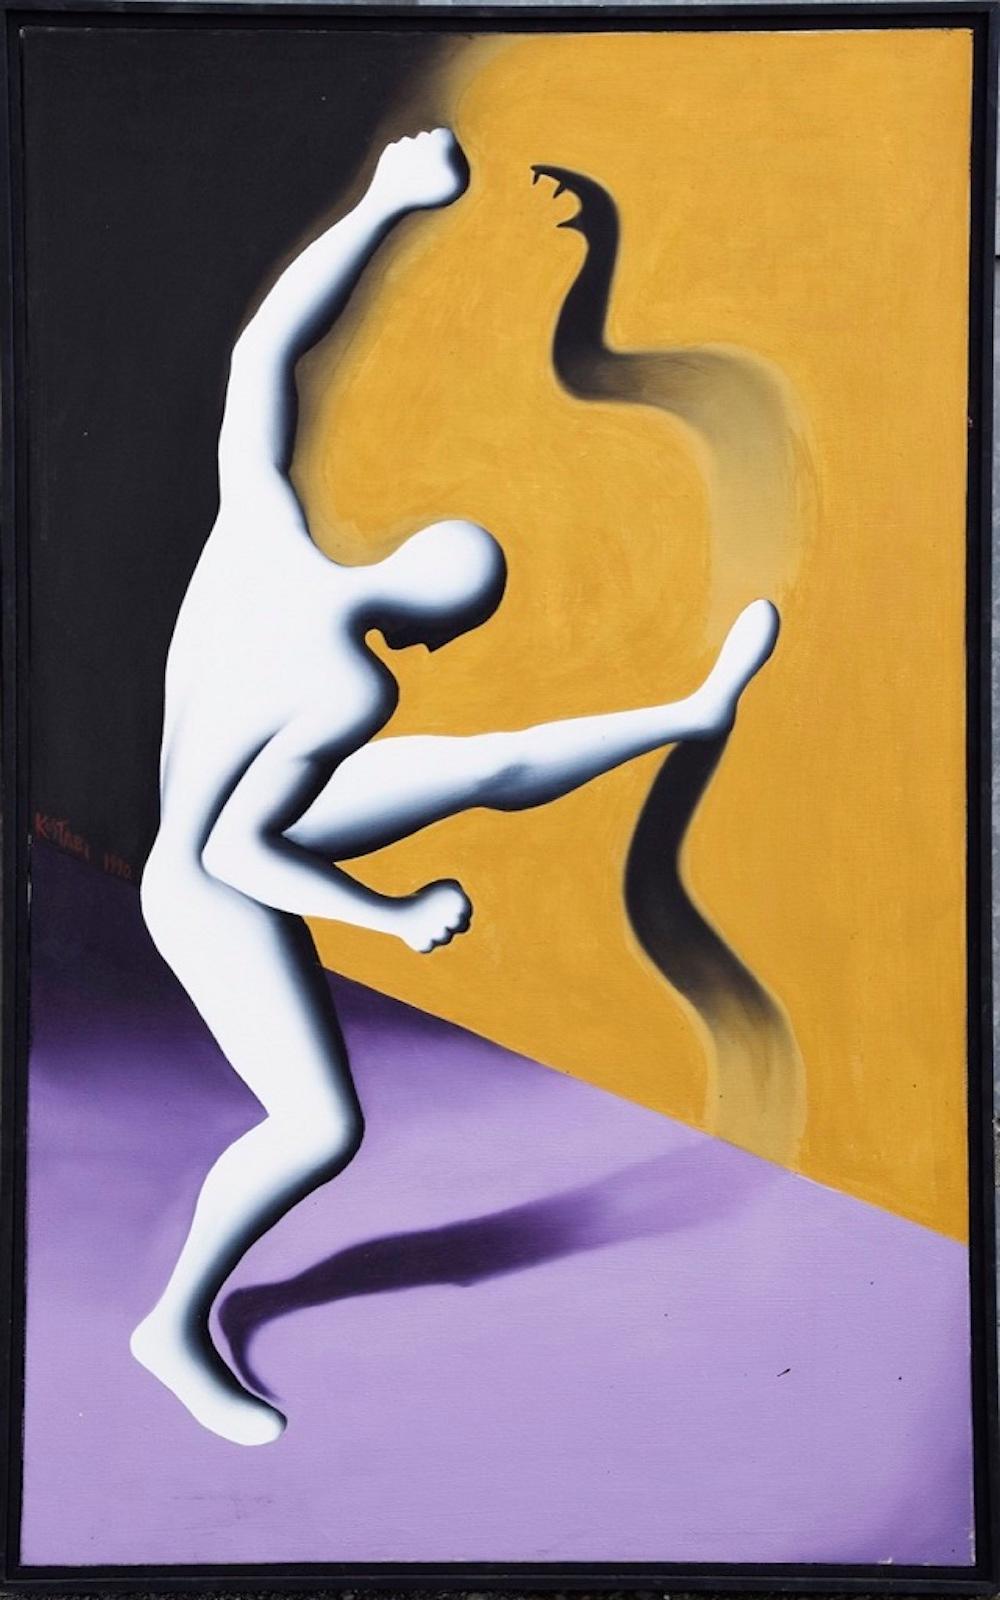 Mark Kostabi Figurative Painting - Cobranetics - Oil on Canvas by M. Kostabi - 1990